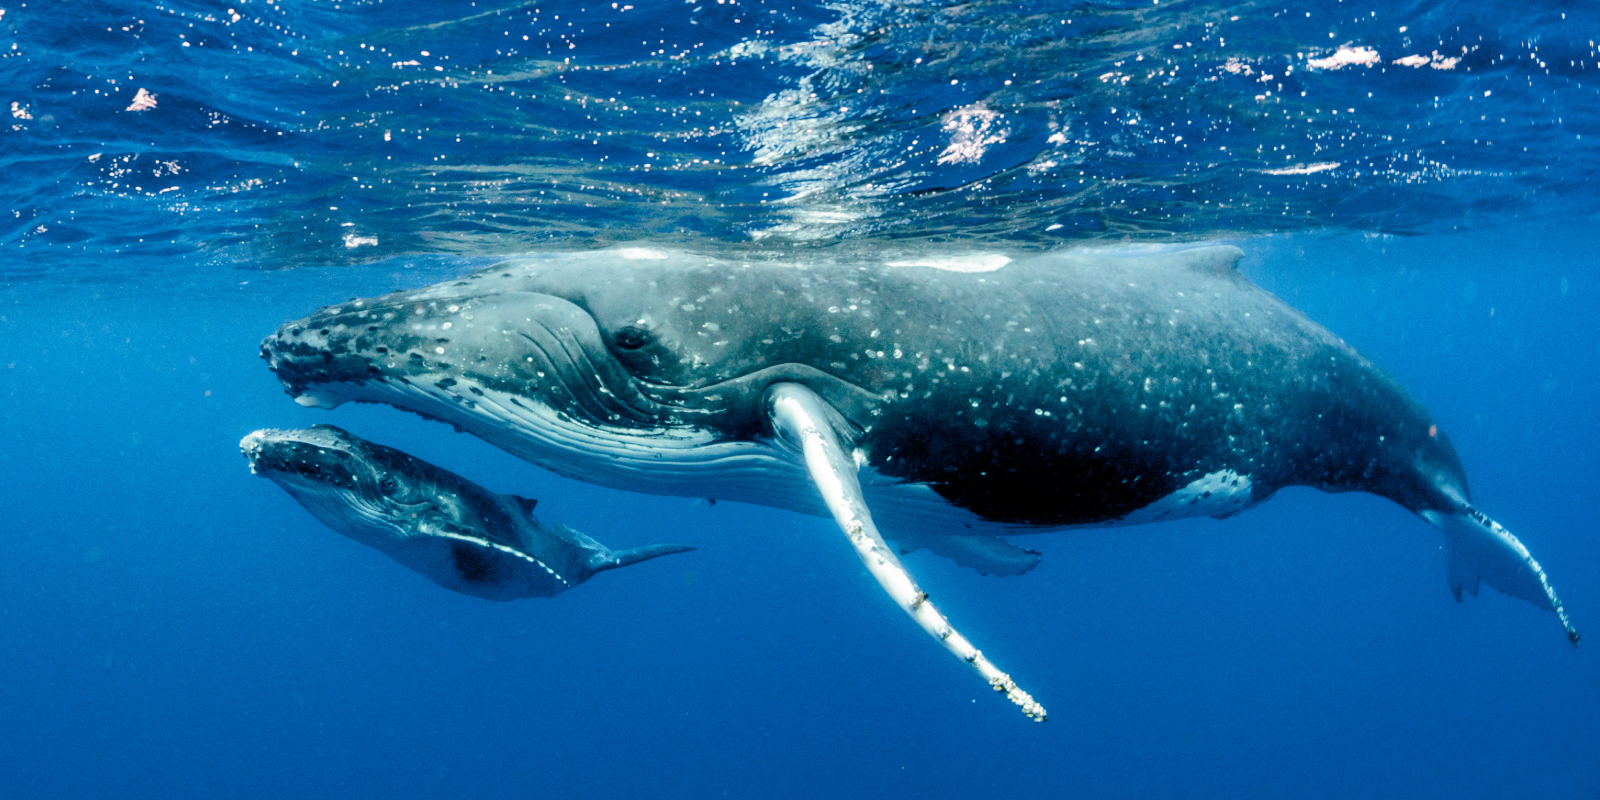 ballenas jorobadas